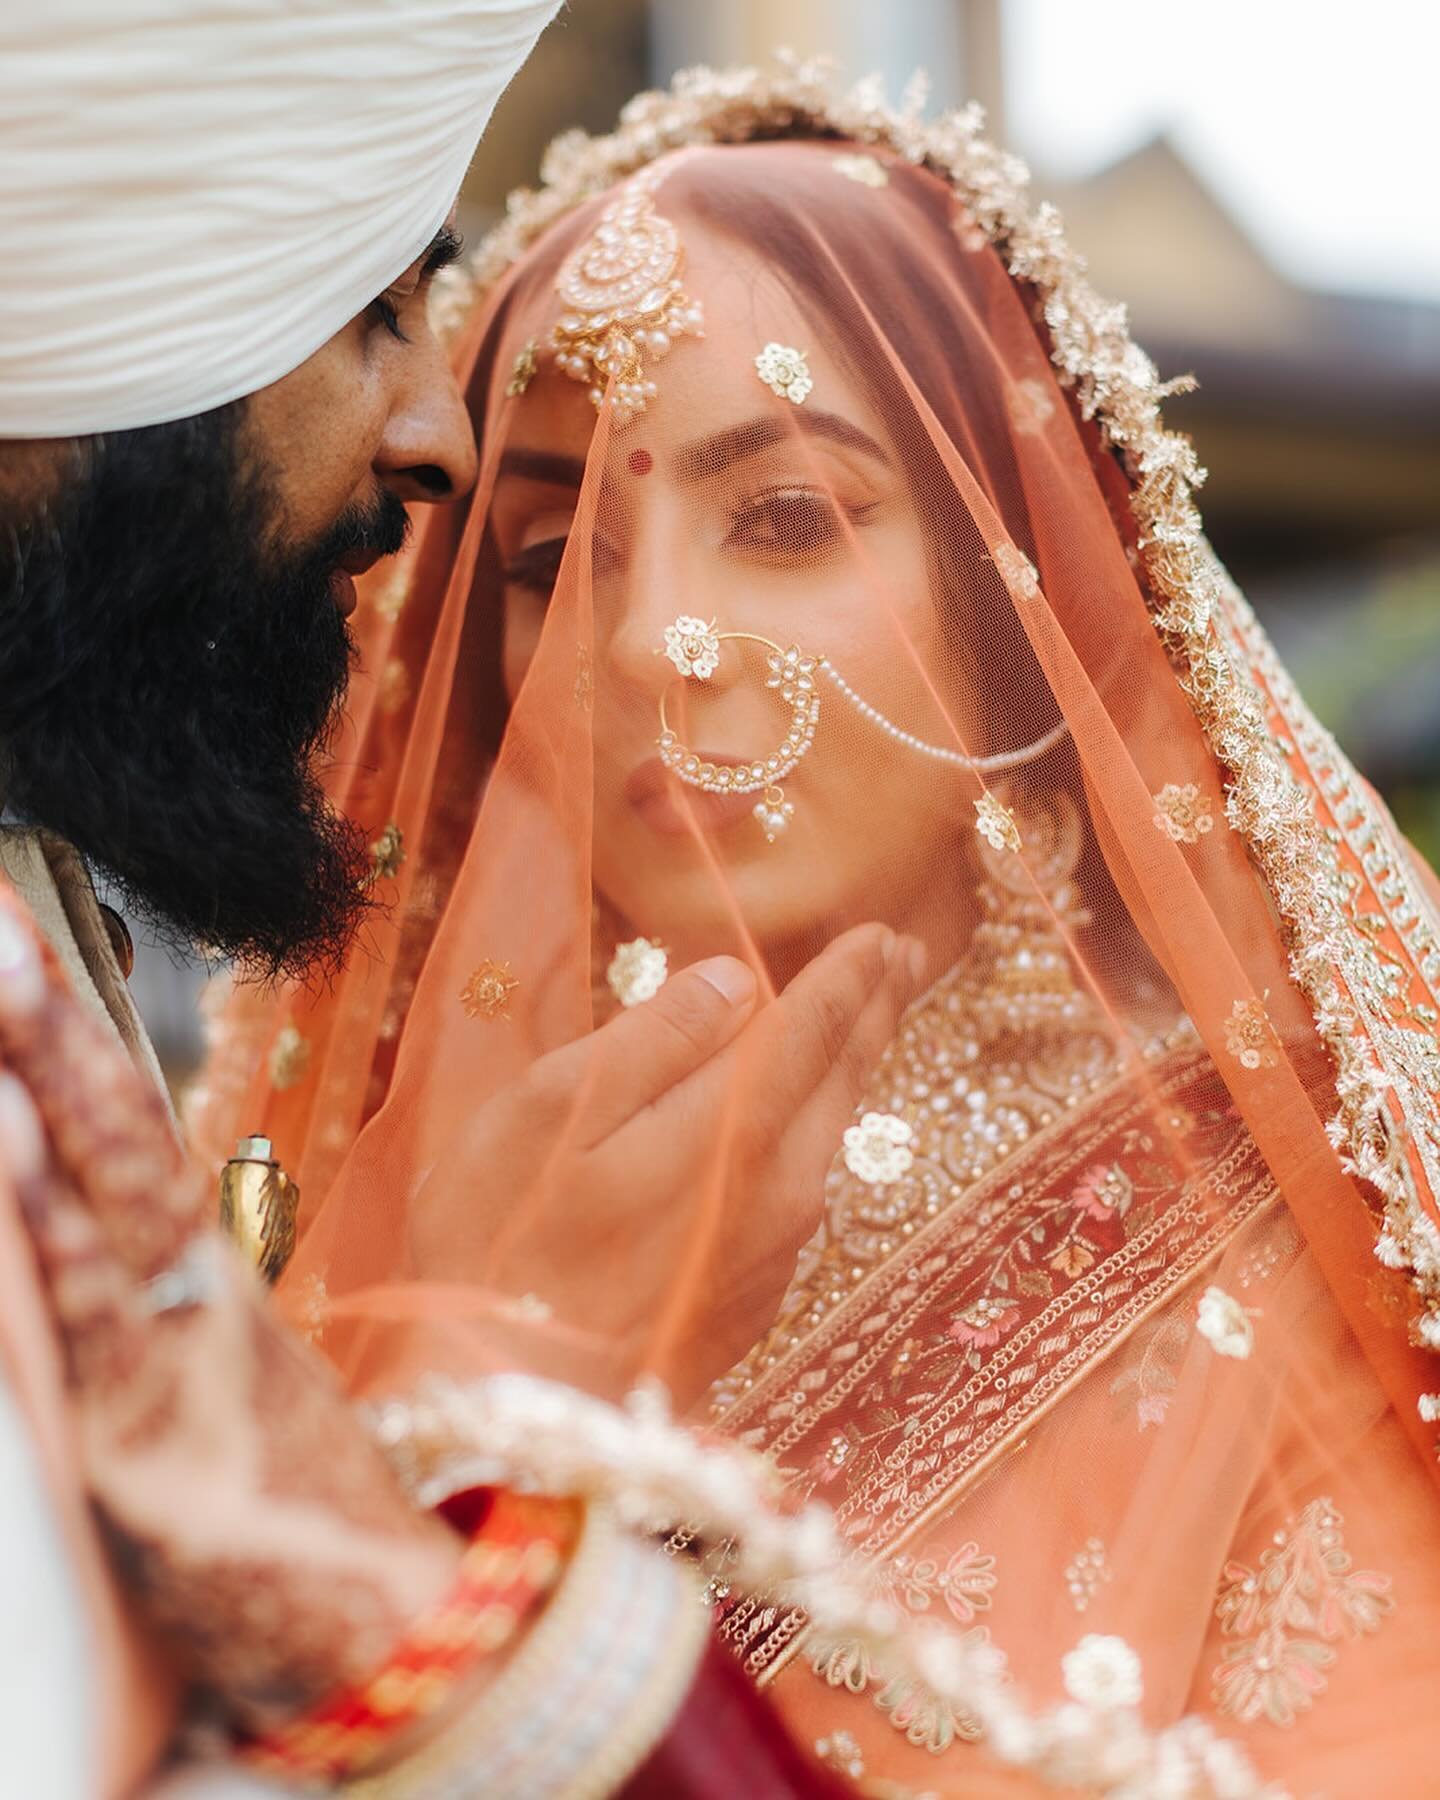 Some of our favorite moments from H&amp;V&rsquo;s intimate wedding ❤️ ⁣
⁣
⁣
⁣
⁣
⁣
#vancouverweddings #vancouverwedding #wedmegood #indianbride #surrey #weddingdress #bridalmakeup #bridaltrousseau #indianwedding #vancouverbride #surreywedding #bridal 